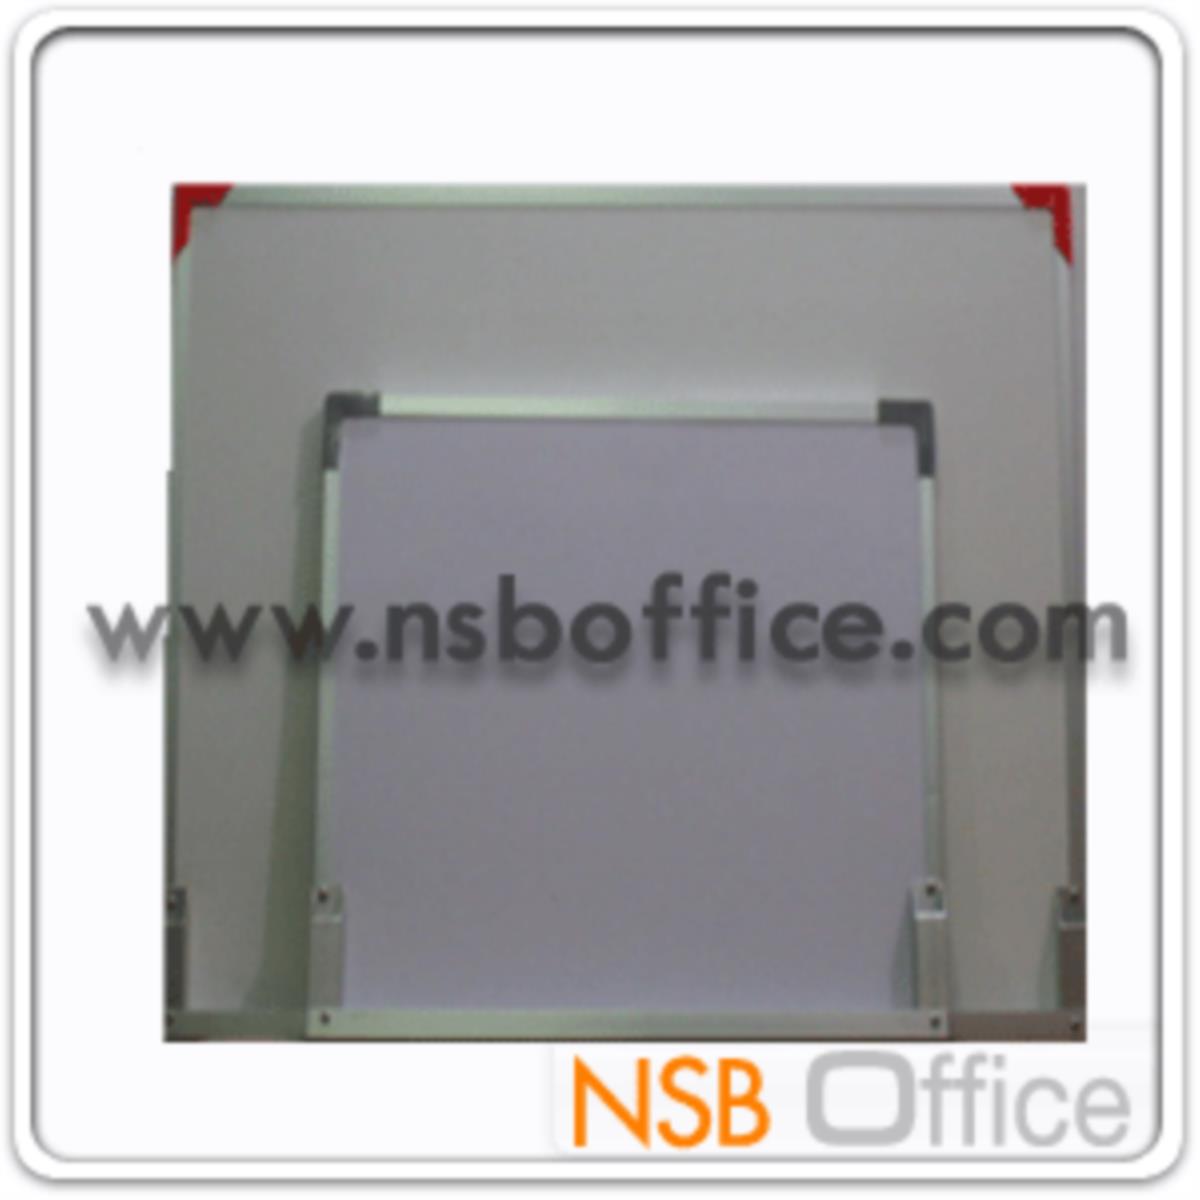 G01A001:กระดานไวท์บอร์ดแบบแขวน White board   120W cm ขอบอลูมิเนียม คิ้วเล็ก (พร้อมงานติดตั้งบนผนัง)